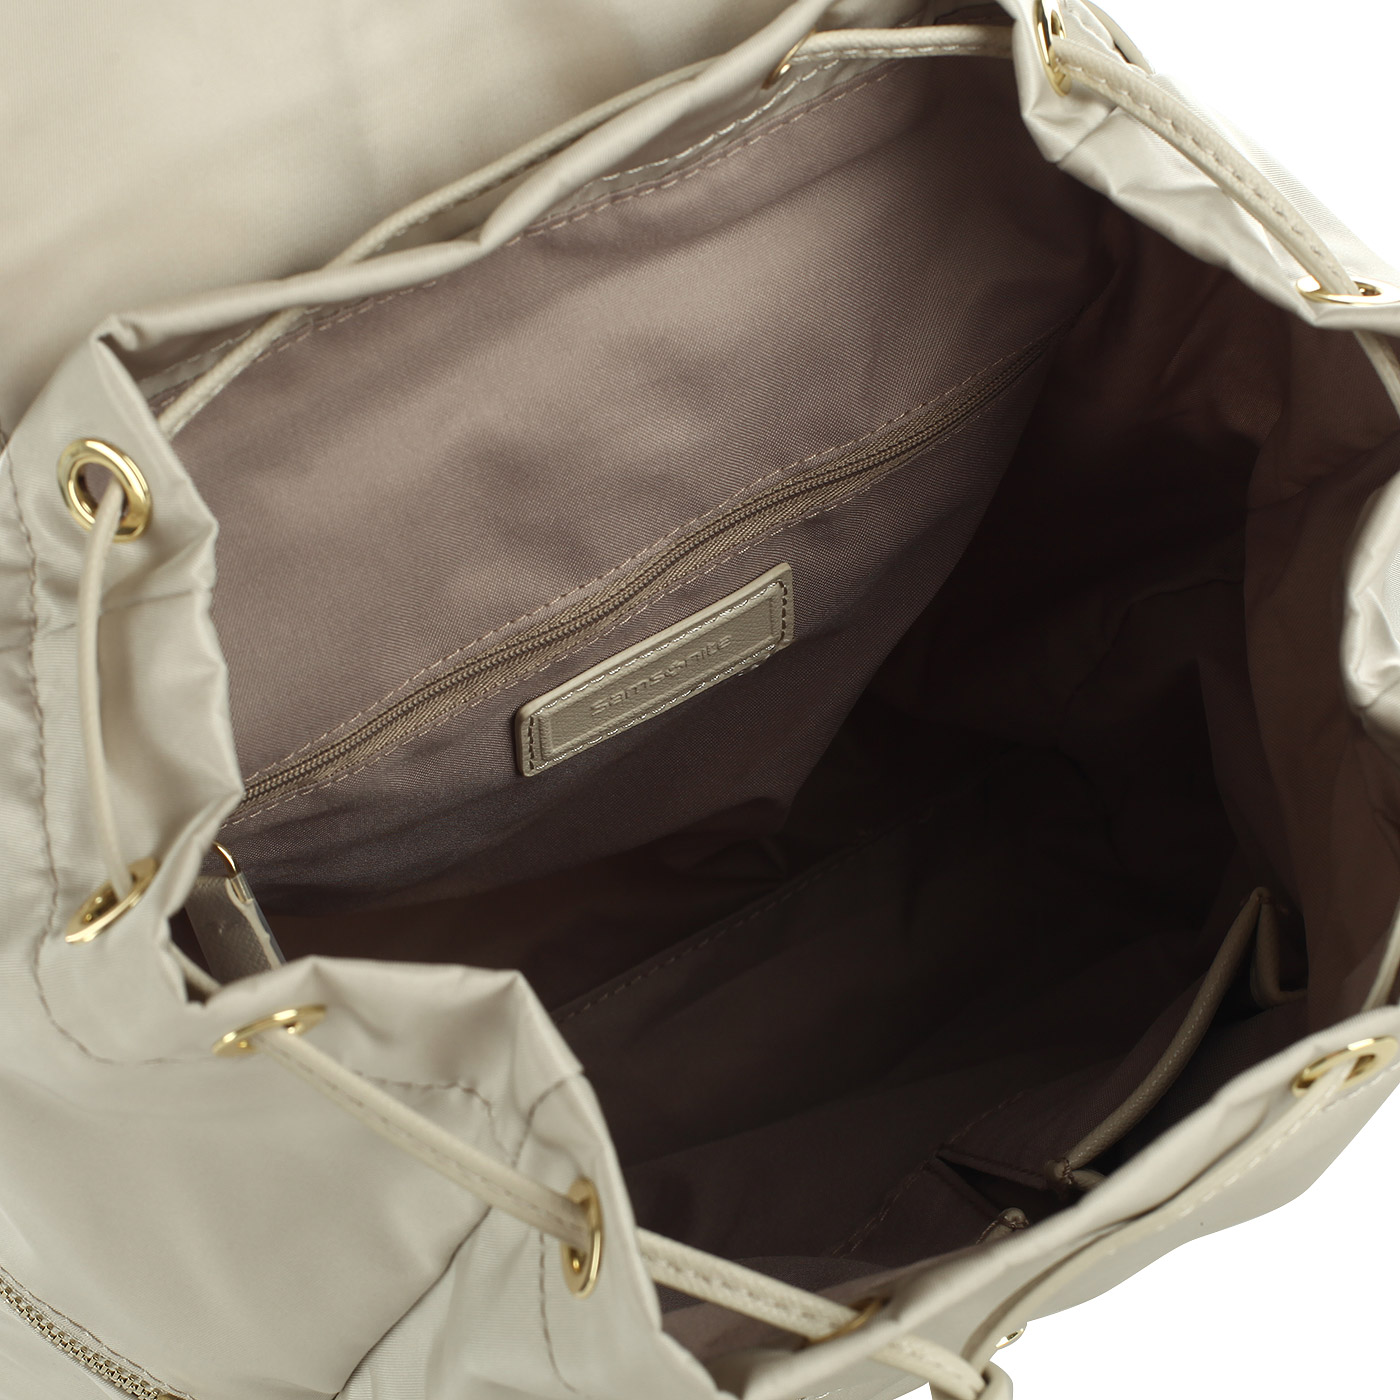 Женский рюкзак с карманами на молнии Samsonite Karissa